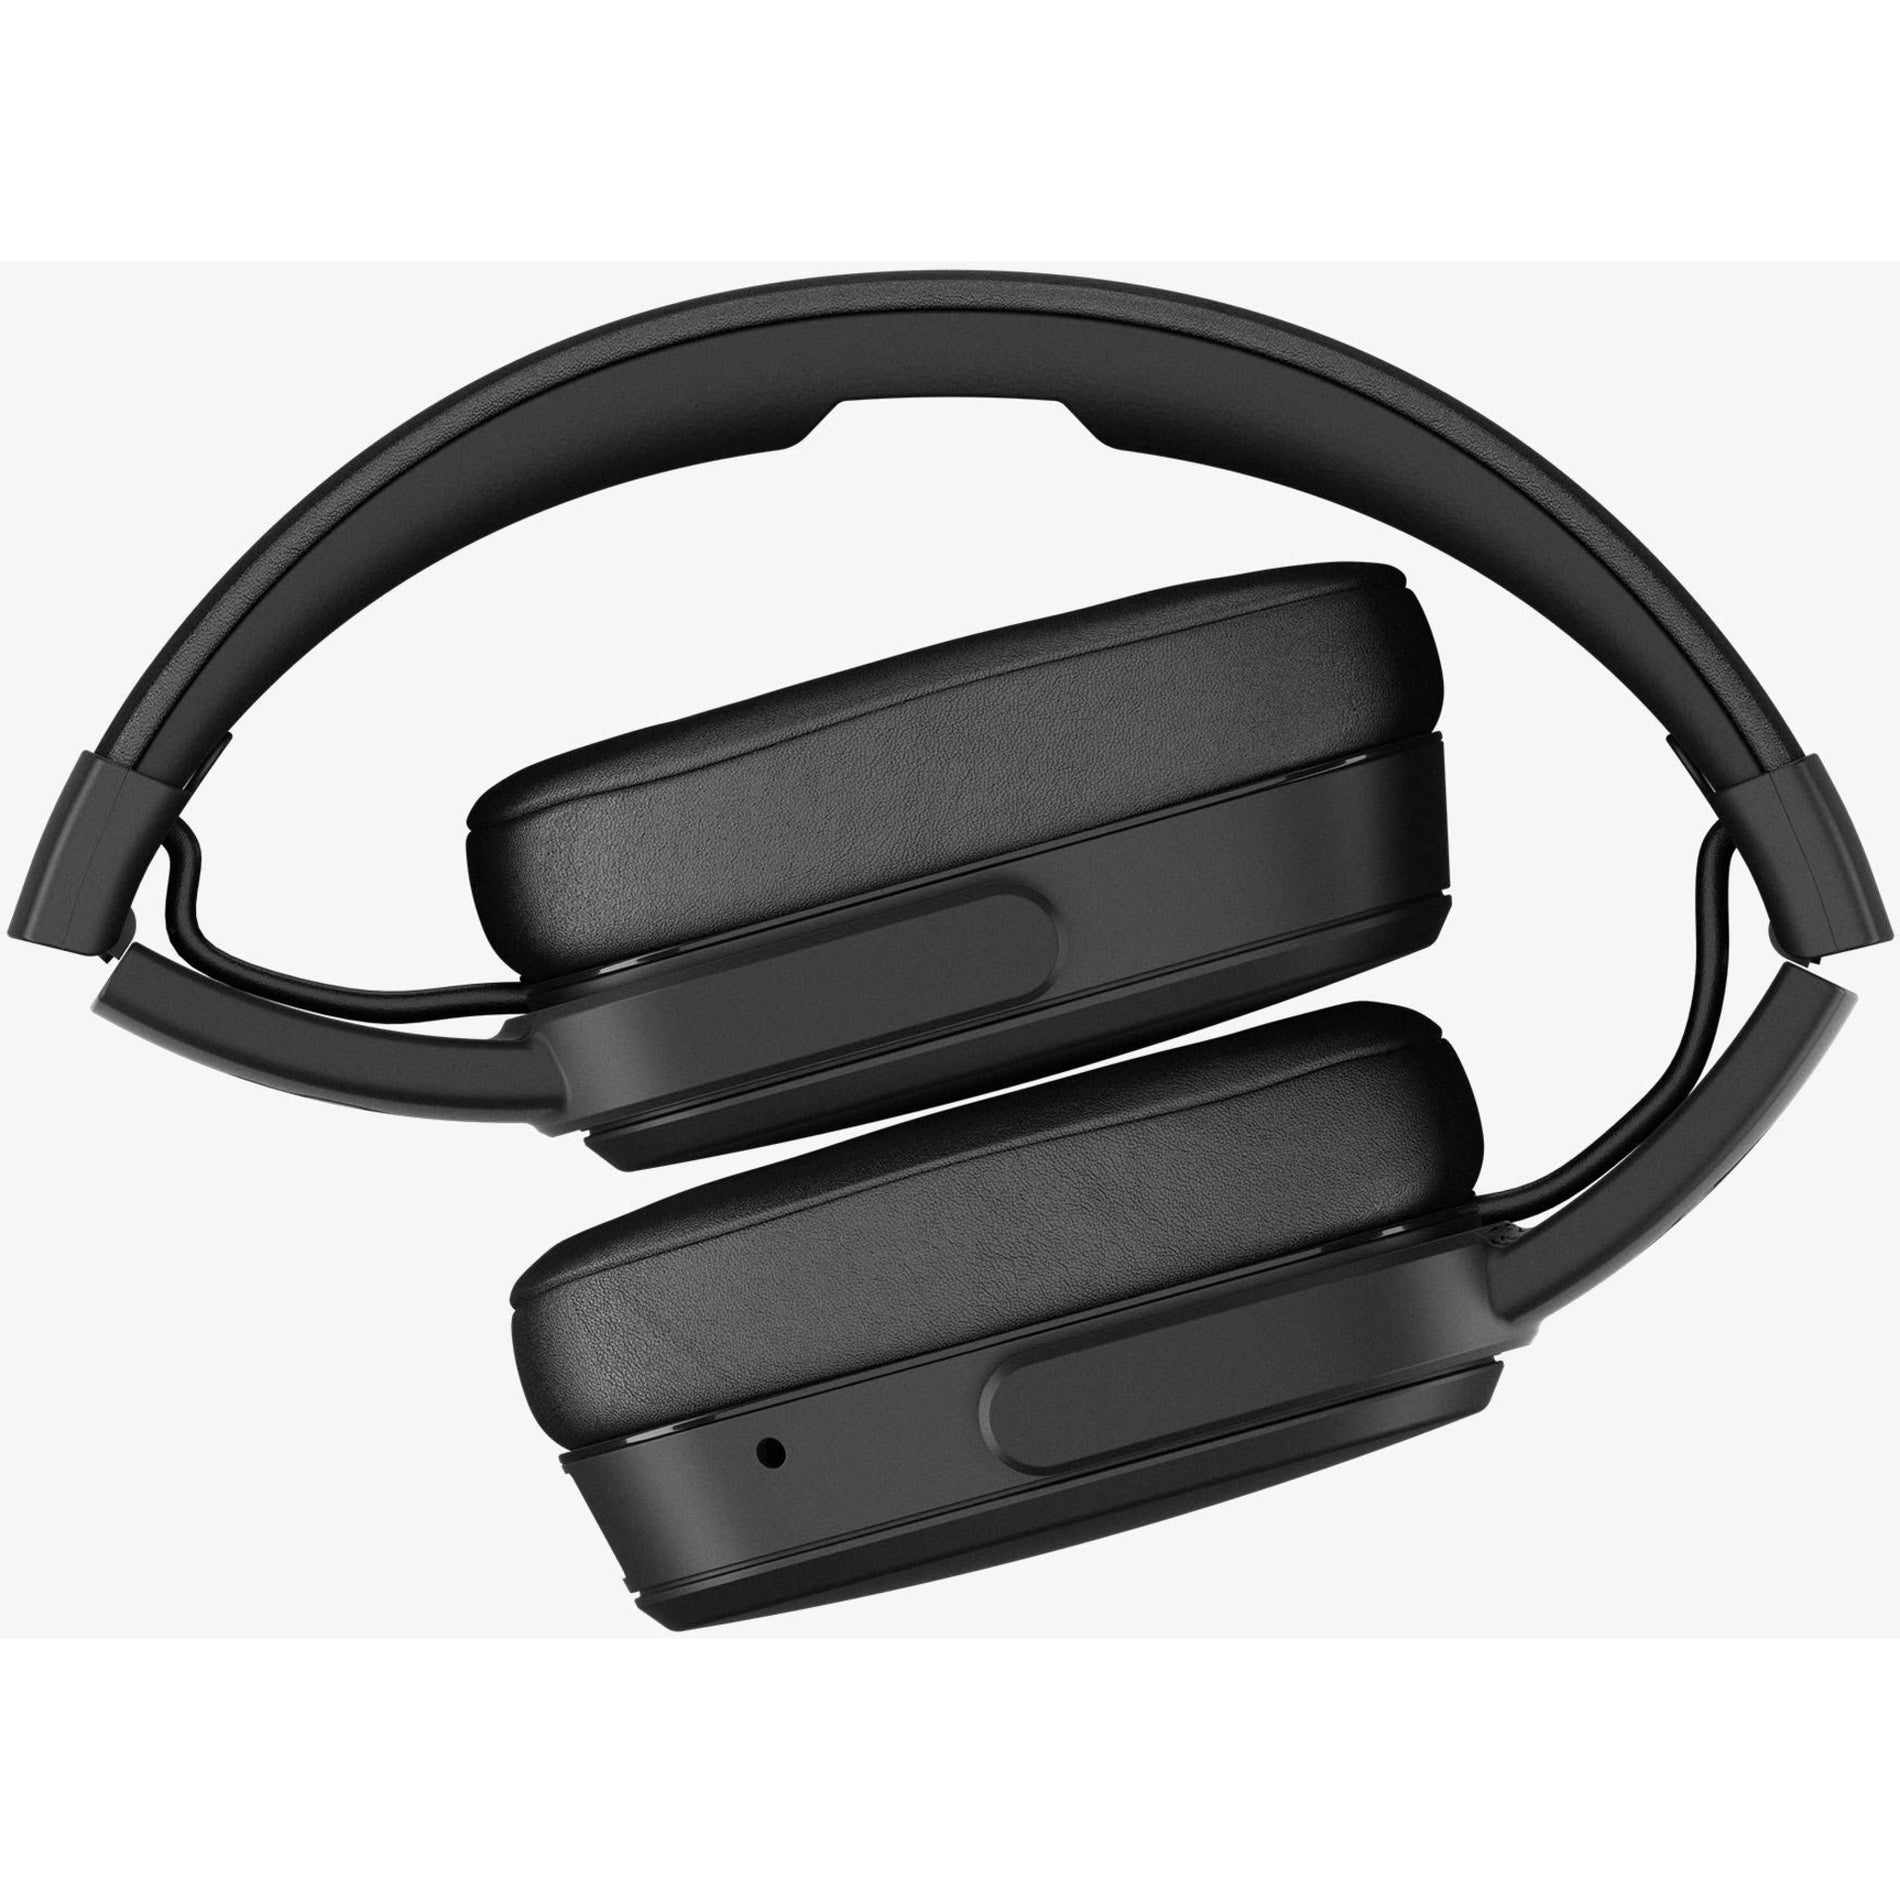 Skullcandy Crusher Wireless Headphone - Powerful Bass, Bluetooth, Over-the-head [Discontinued]